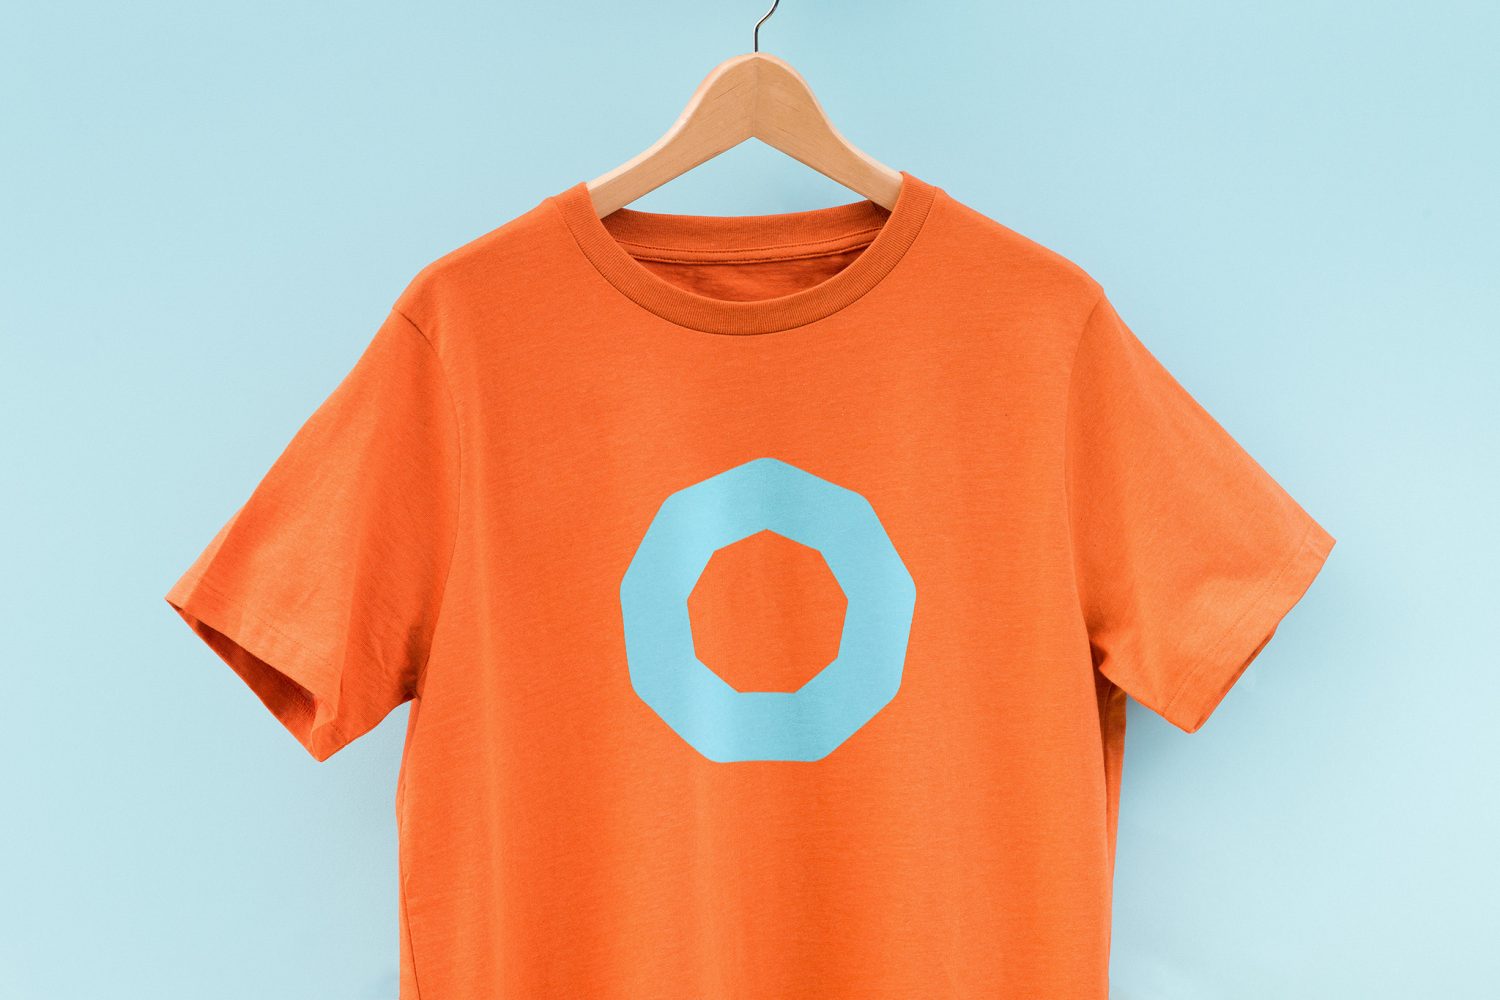 Branded t-shirt designed by Werklig for professional banking tool Holvi